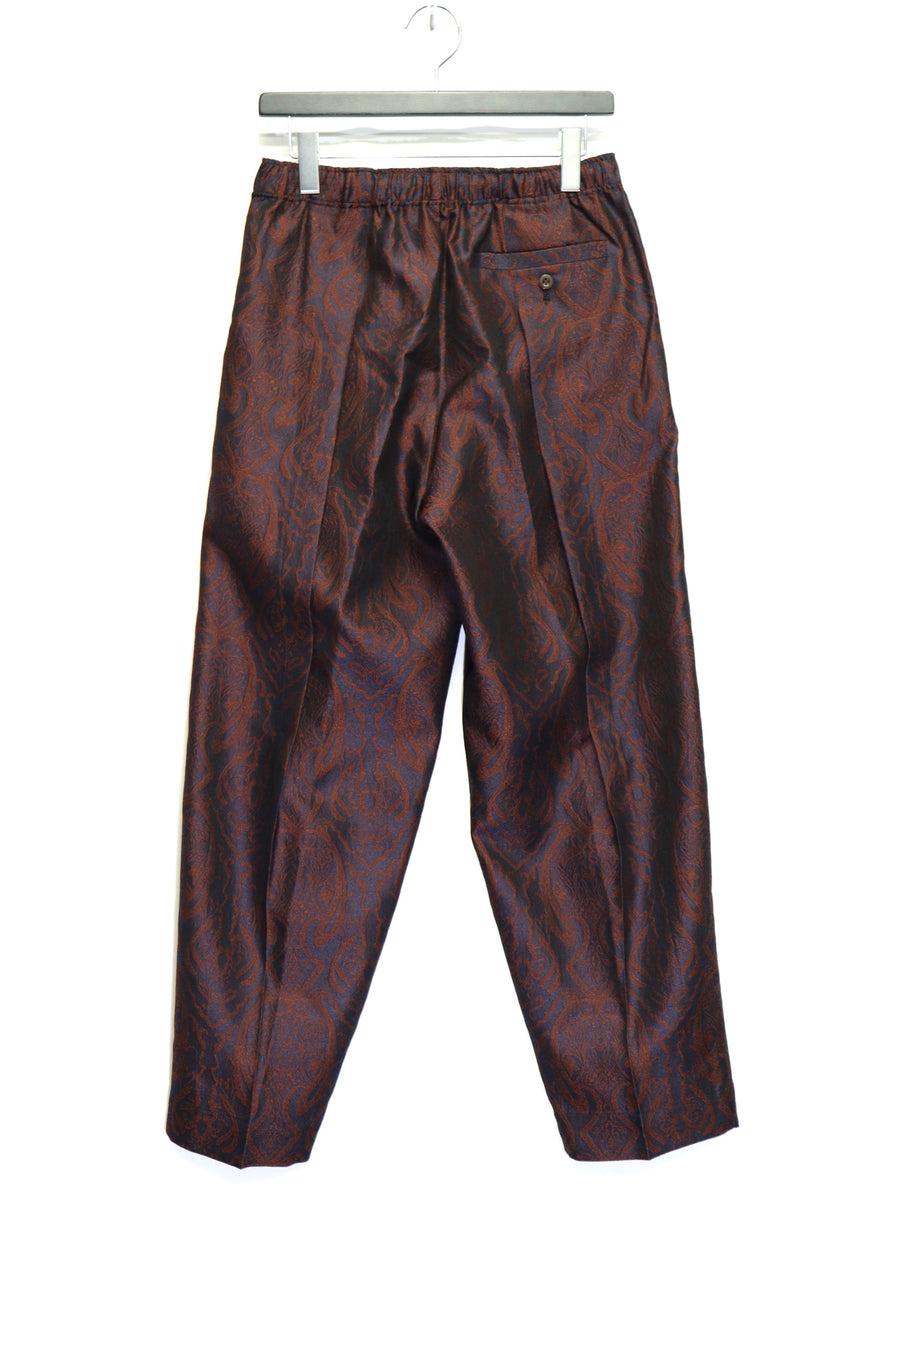 TOGA VIRILIS  Paisley jacquard easy pants(DARK RED)